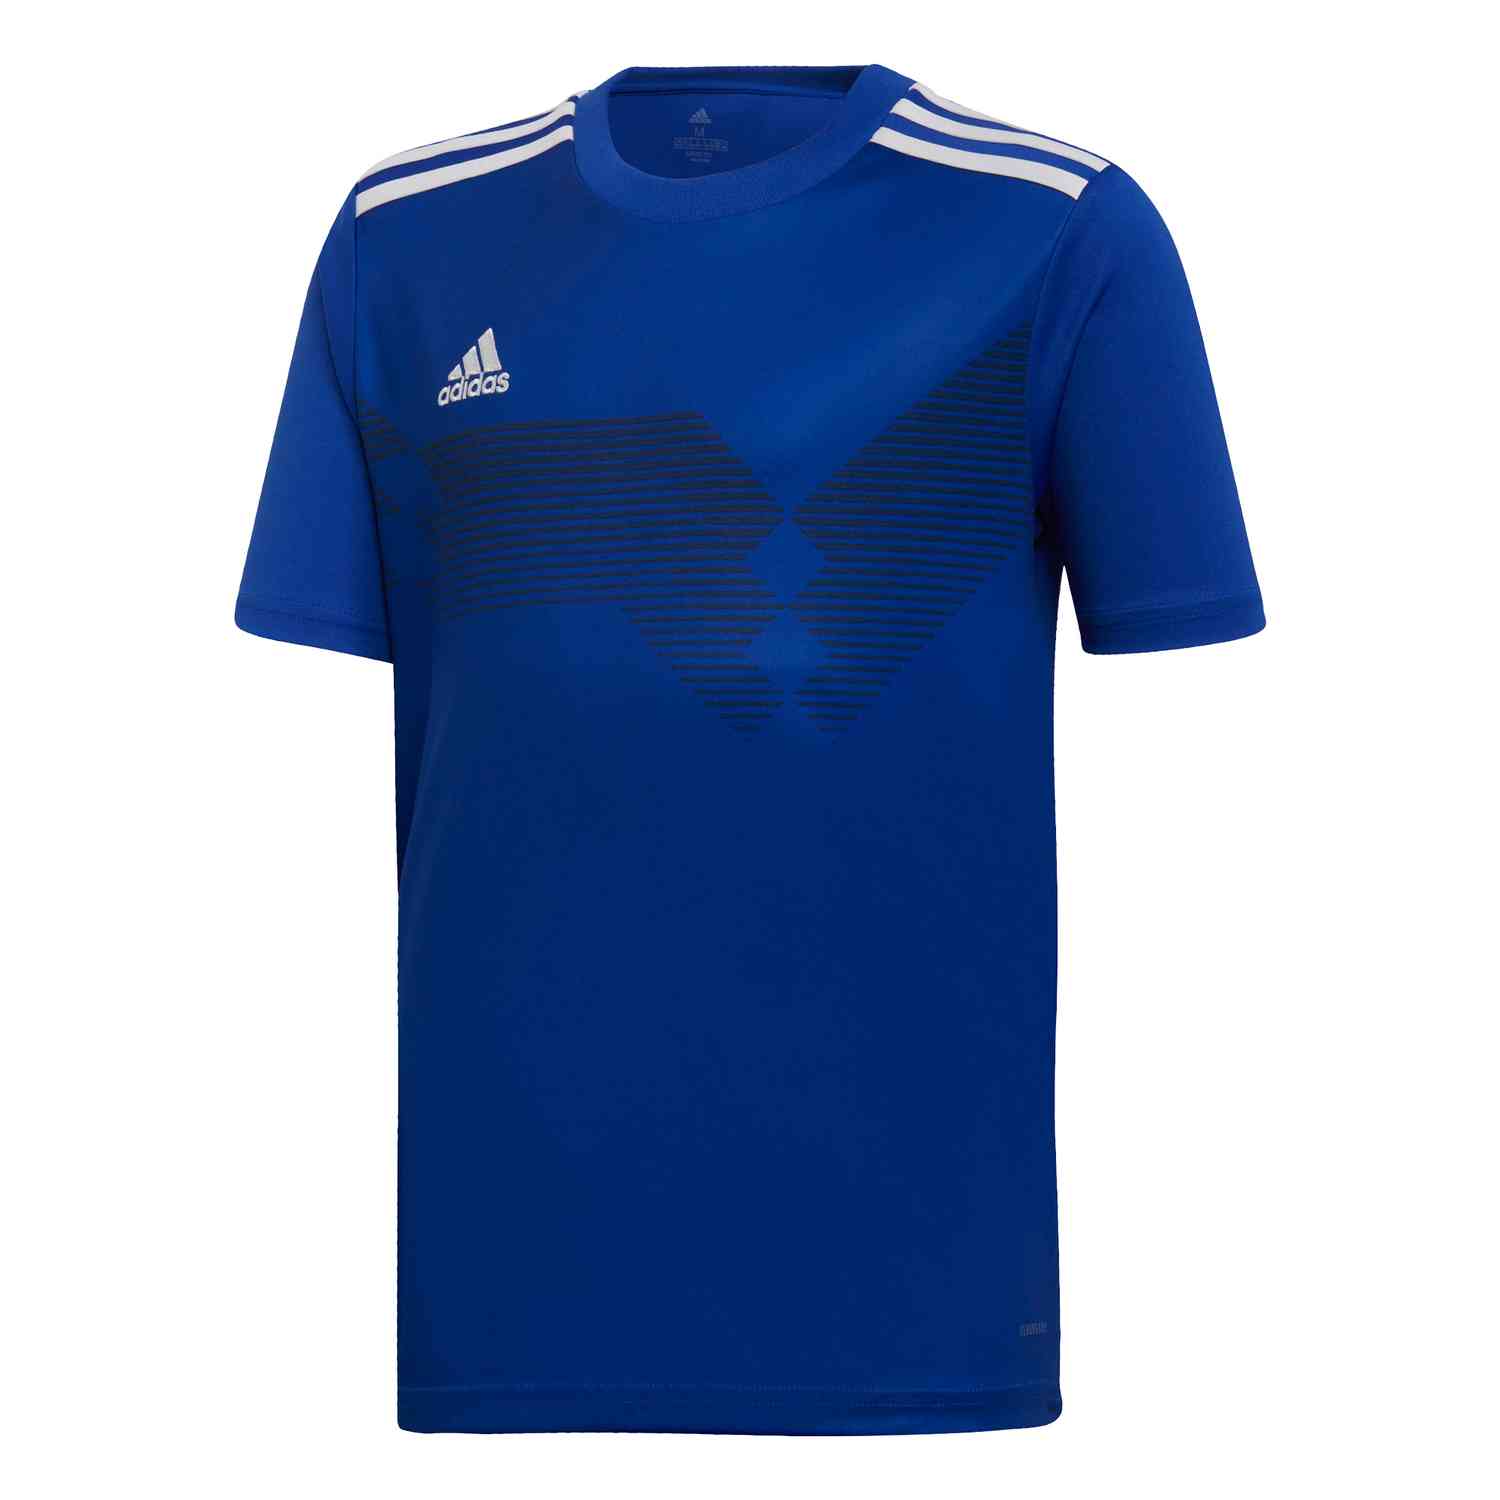 Kids adidas Campeon 19 Jersey - Bold Blue/White - SoccerPro